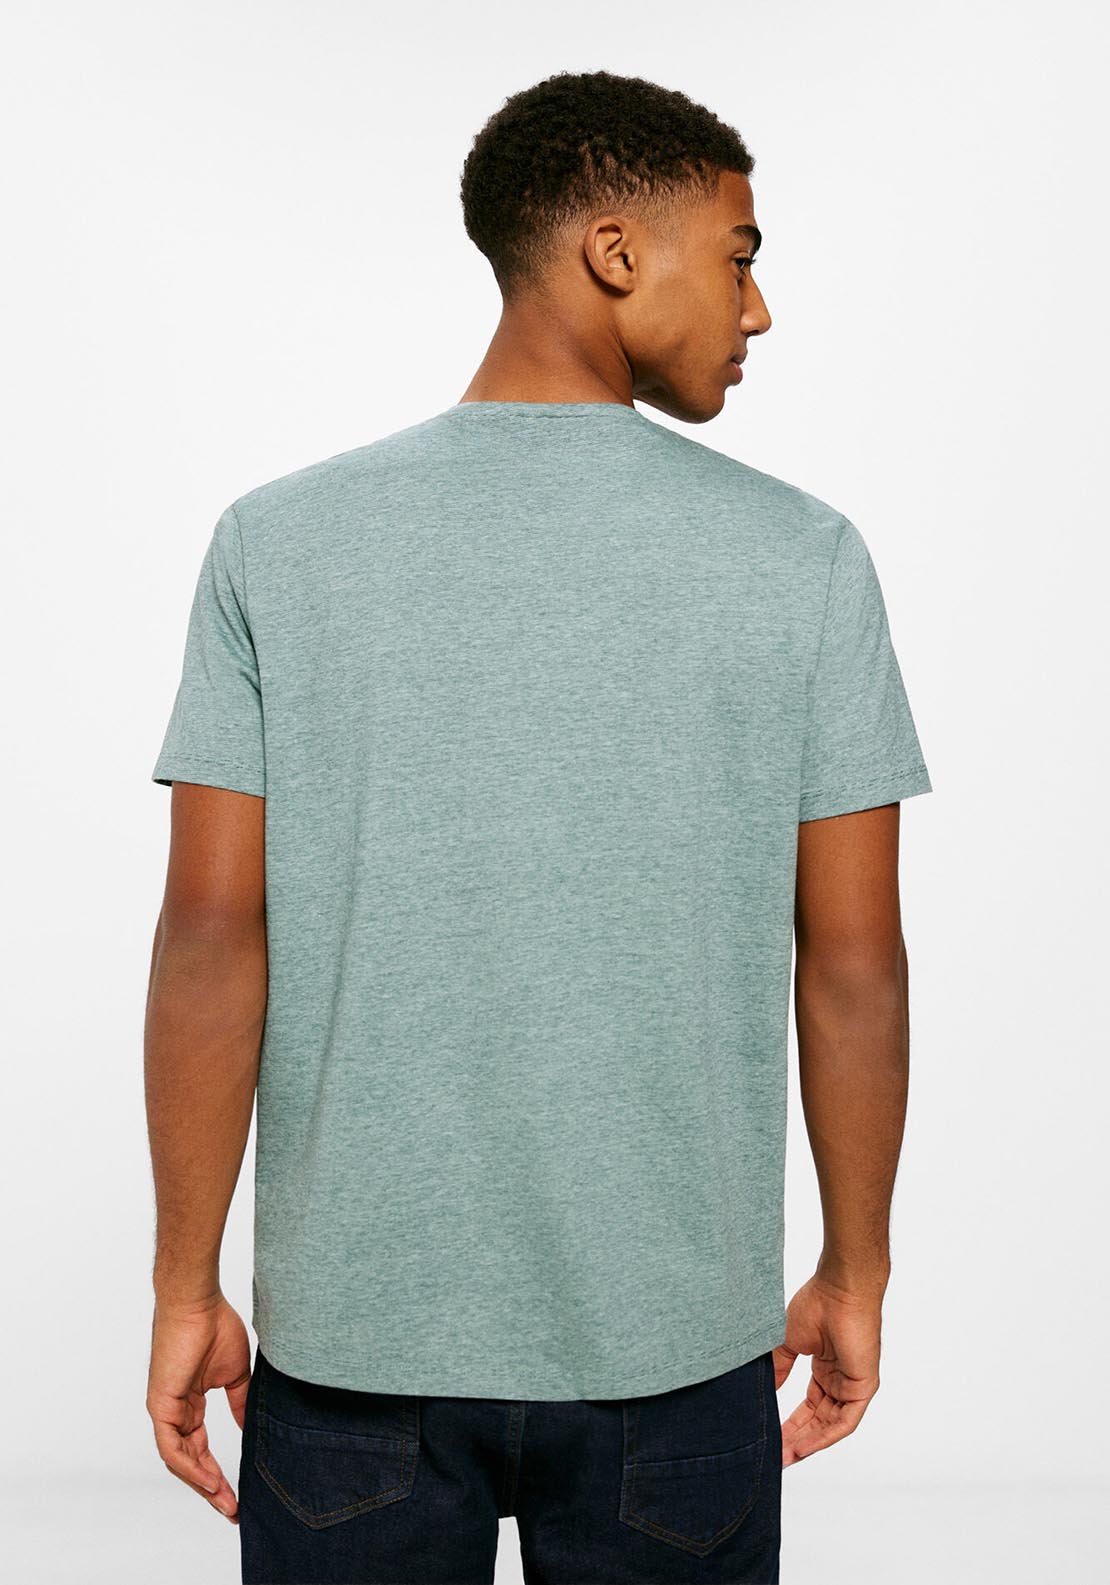 Springfield Short Sleeve Microstripe Tshirt - Green 3 Shaws Department Stores